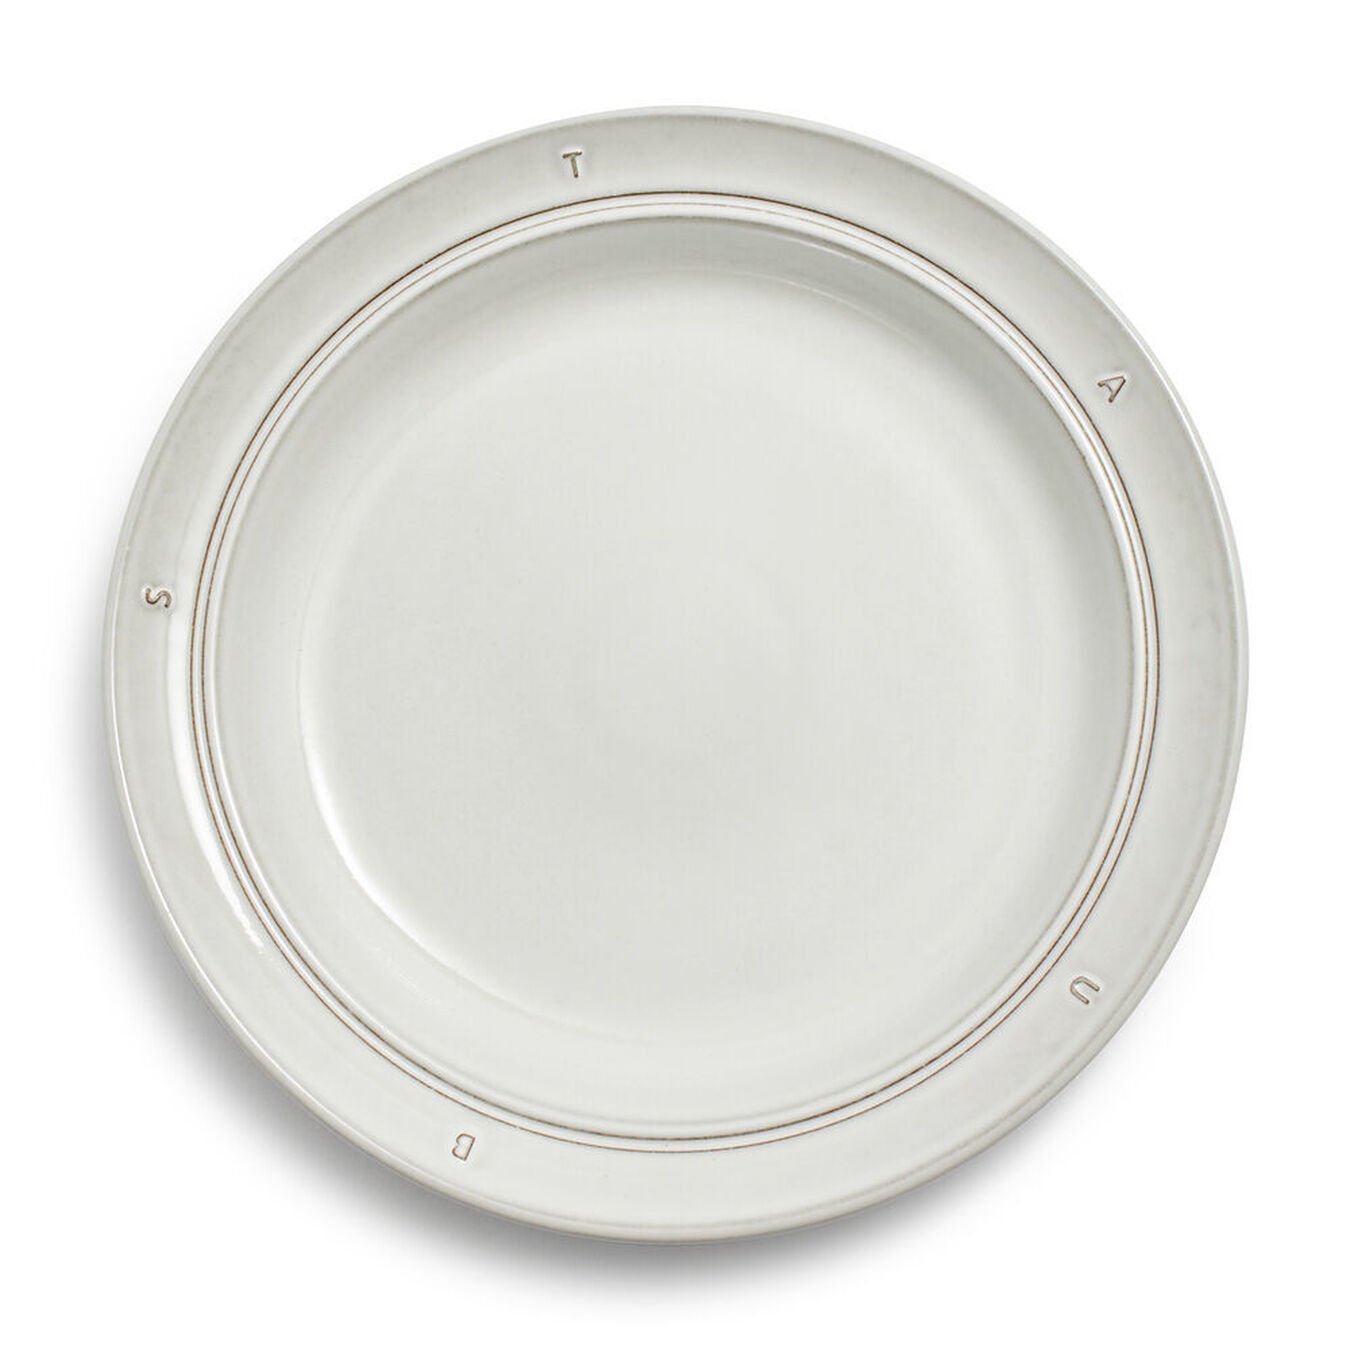 Serving set, 12 Piece | Off-White | ceramic,,large 3